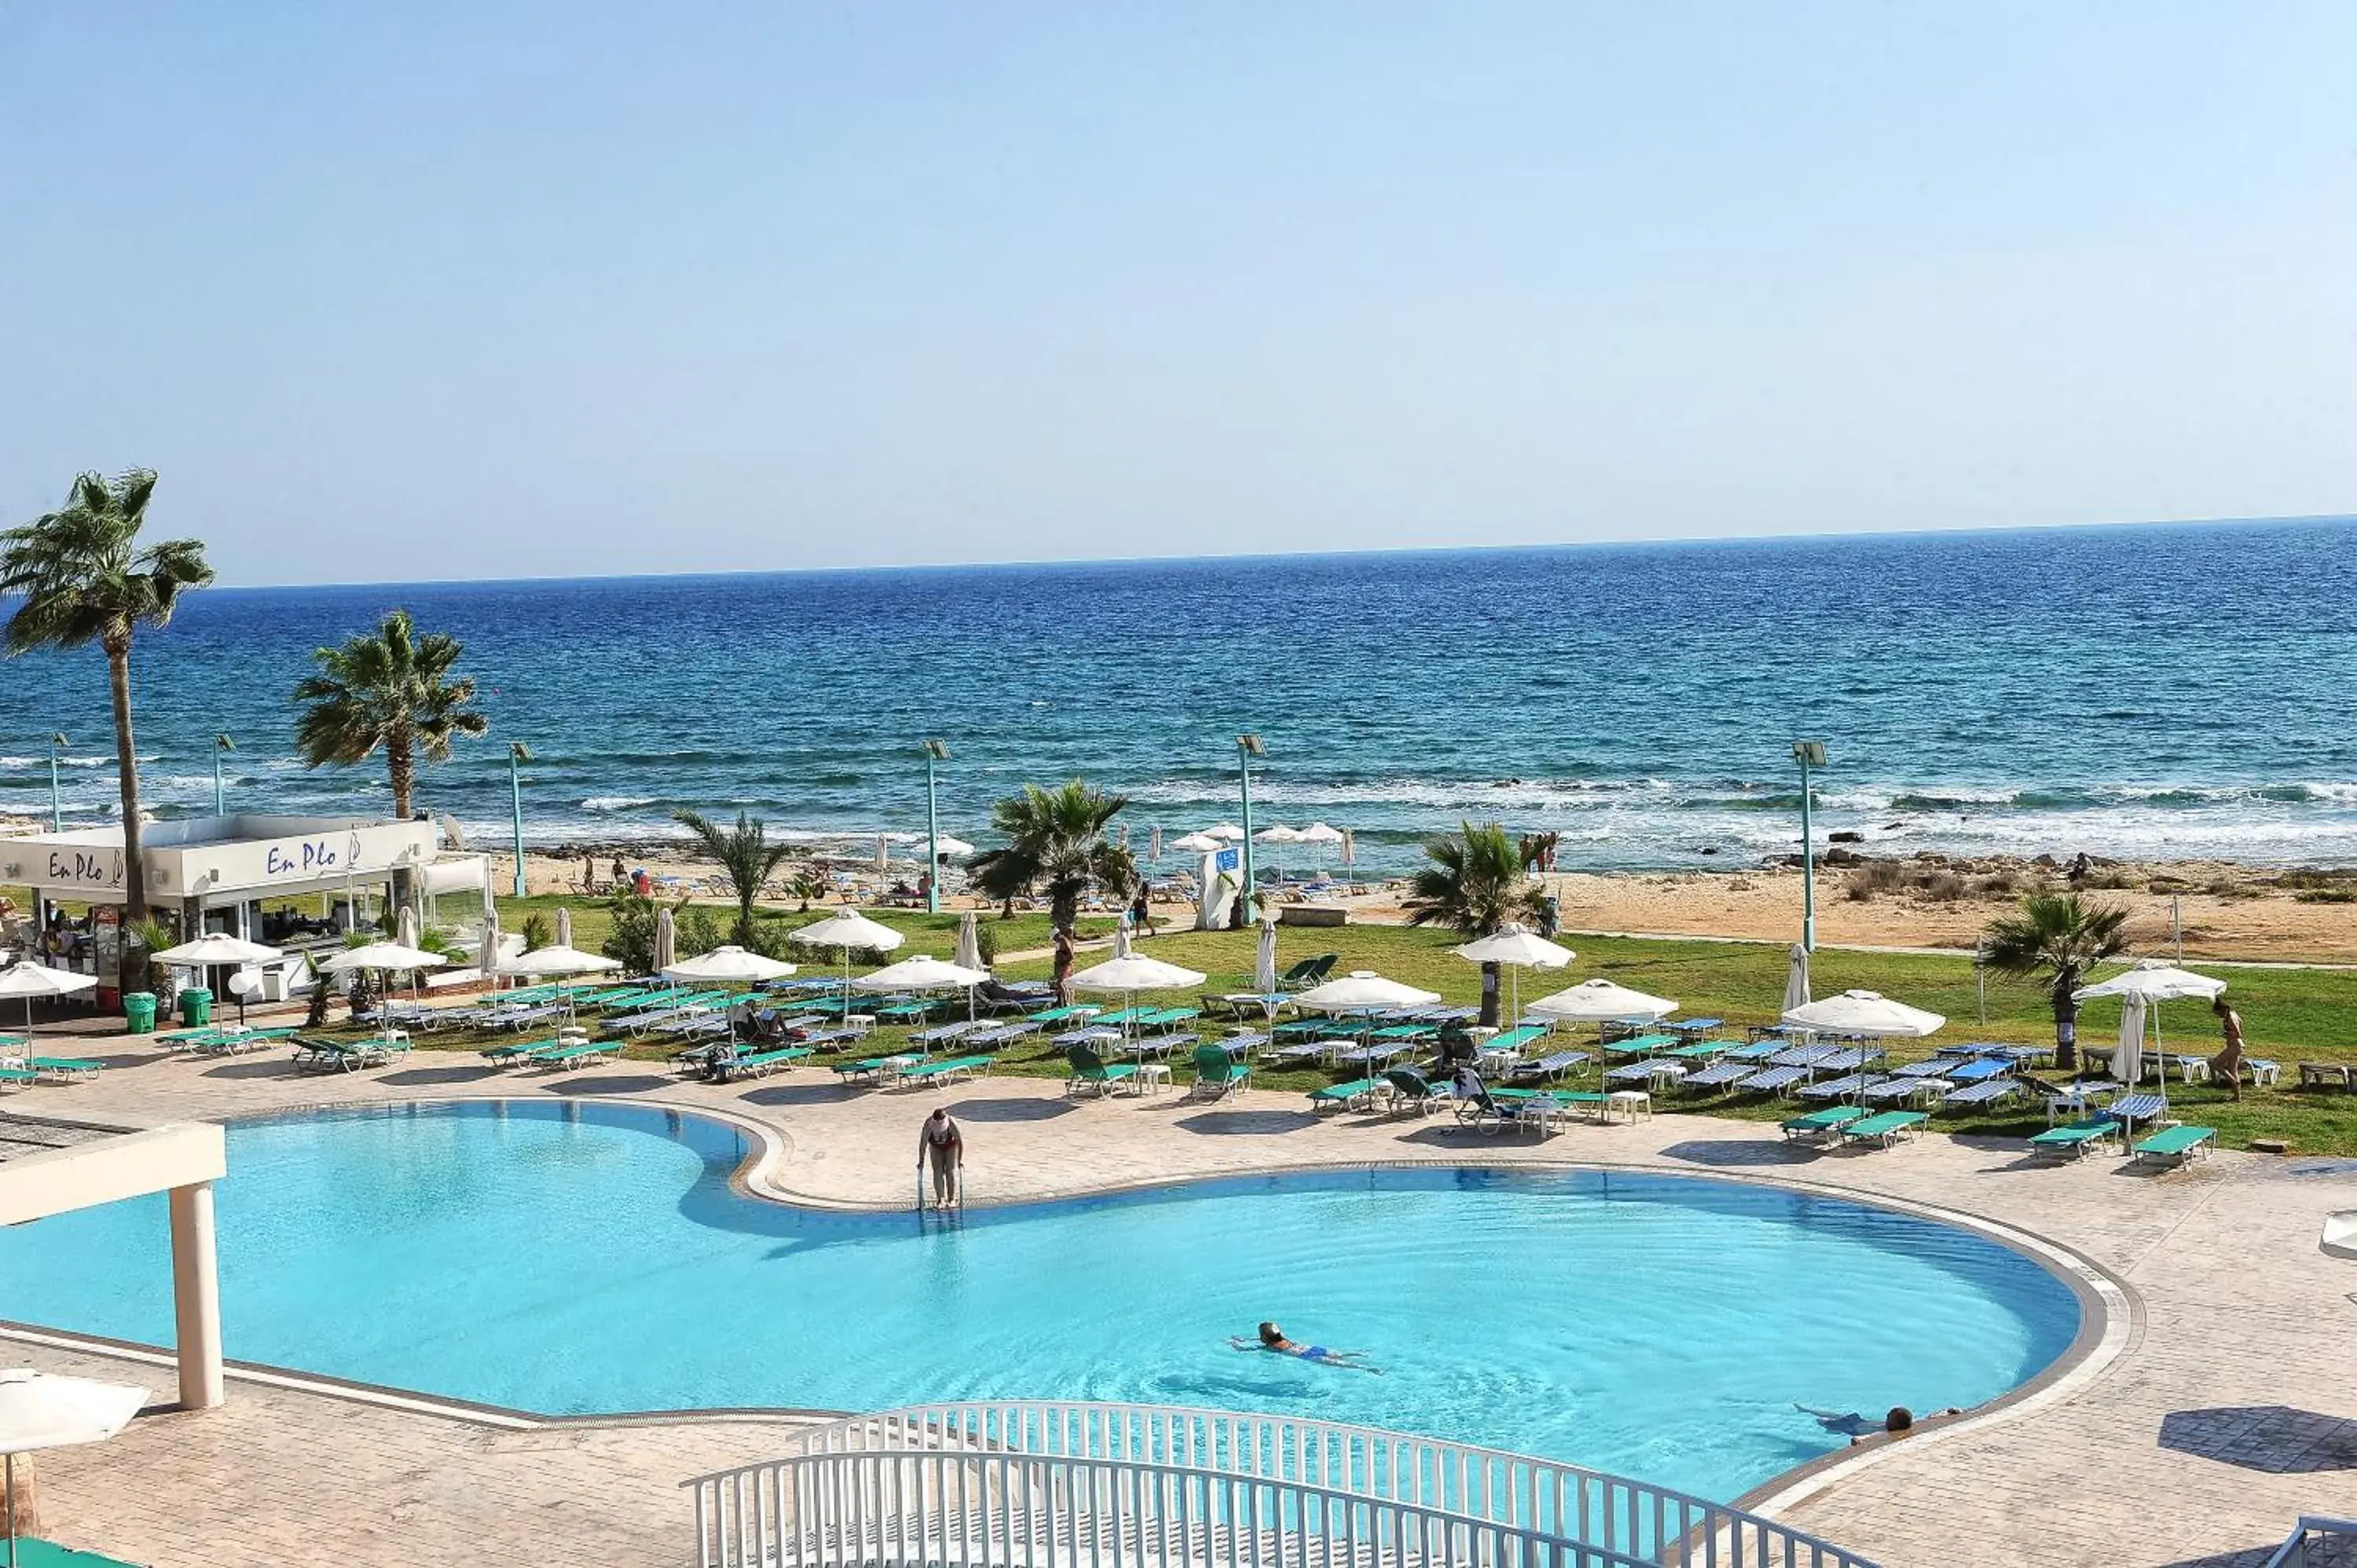 Pool View in Piere - Anne Beach Hotel